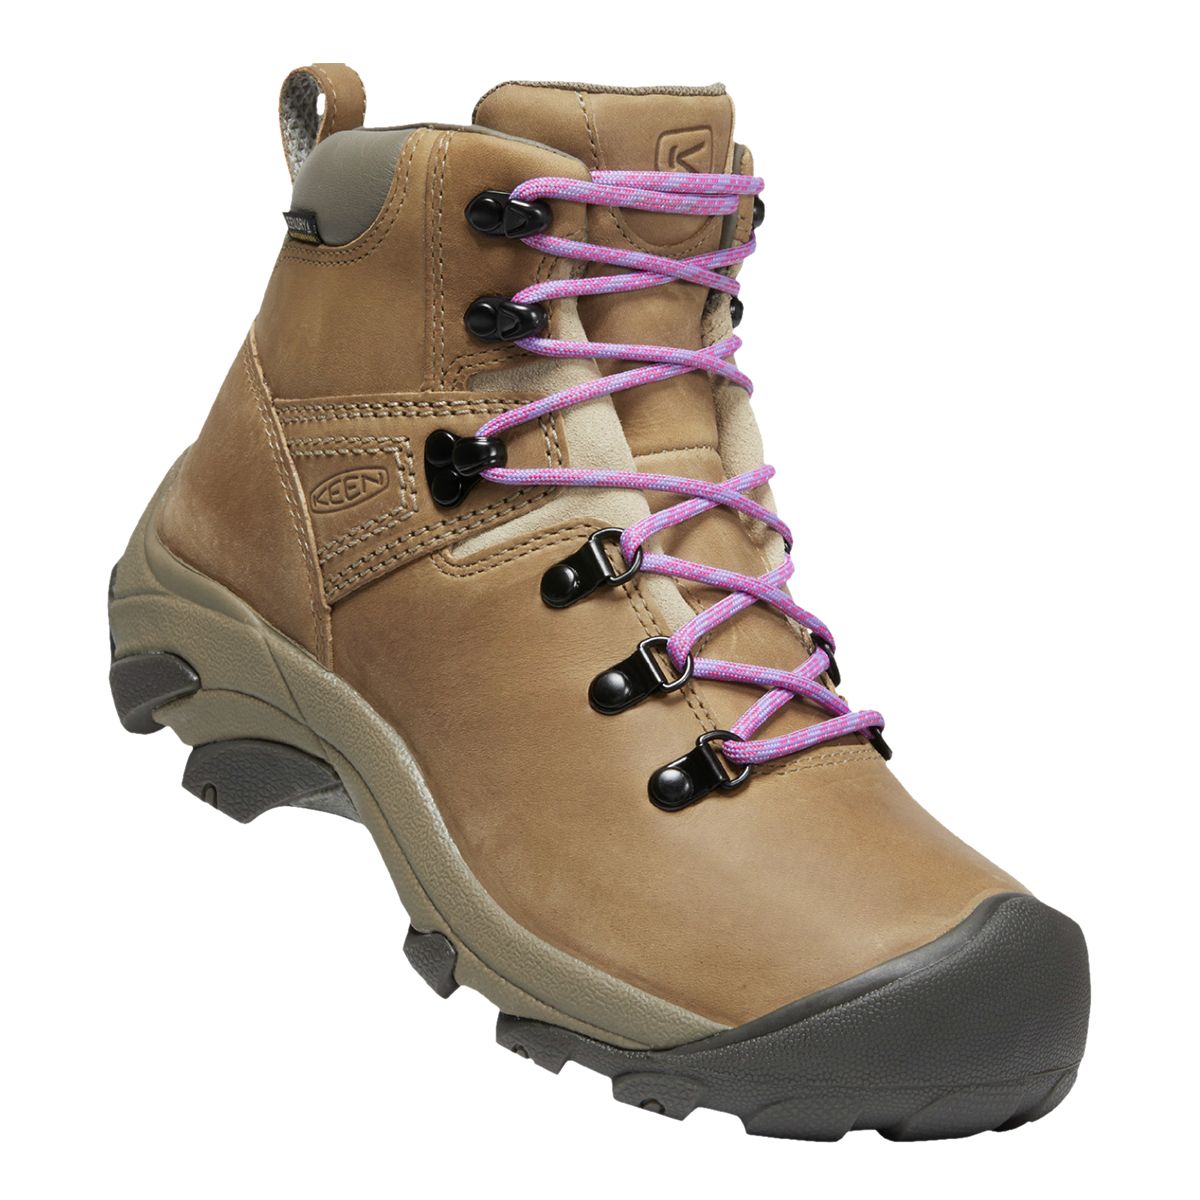 Keen Women's Pyrenees Waterproof Hiking Boots